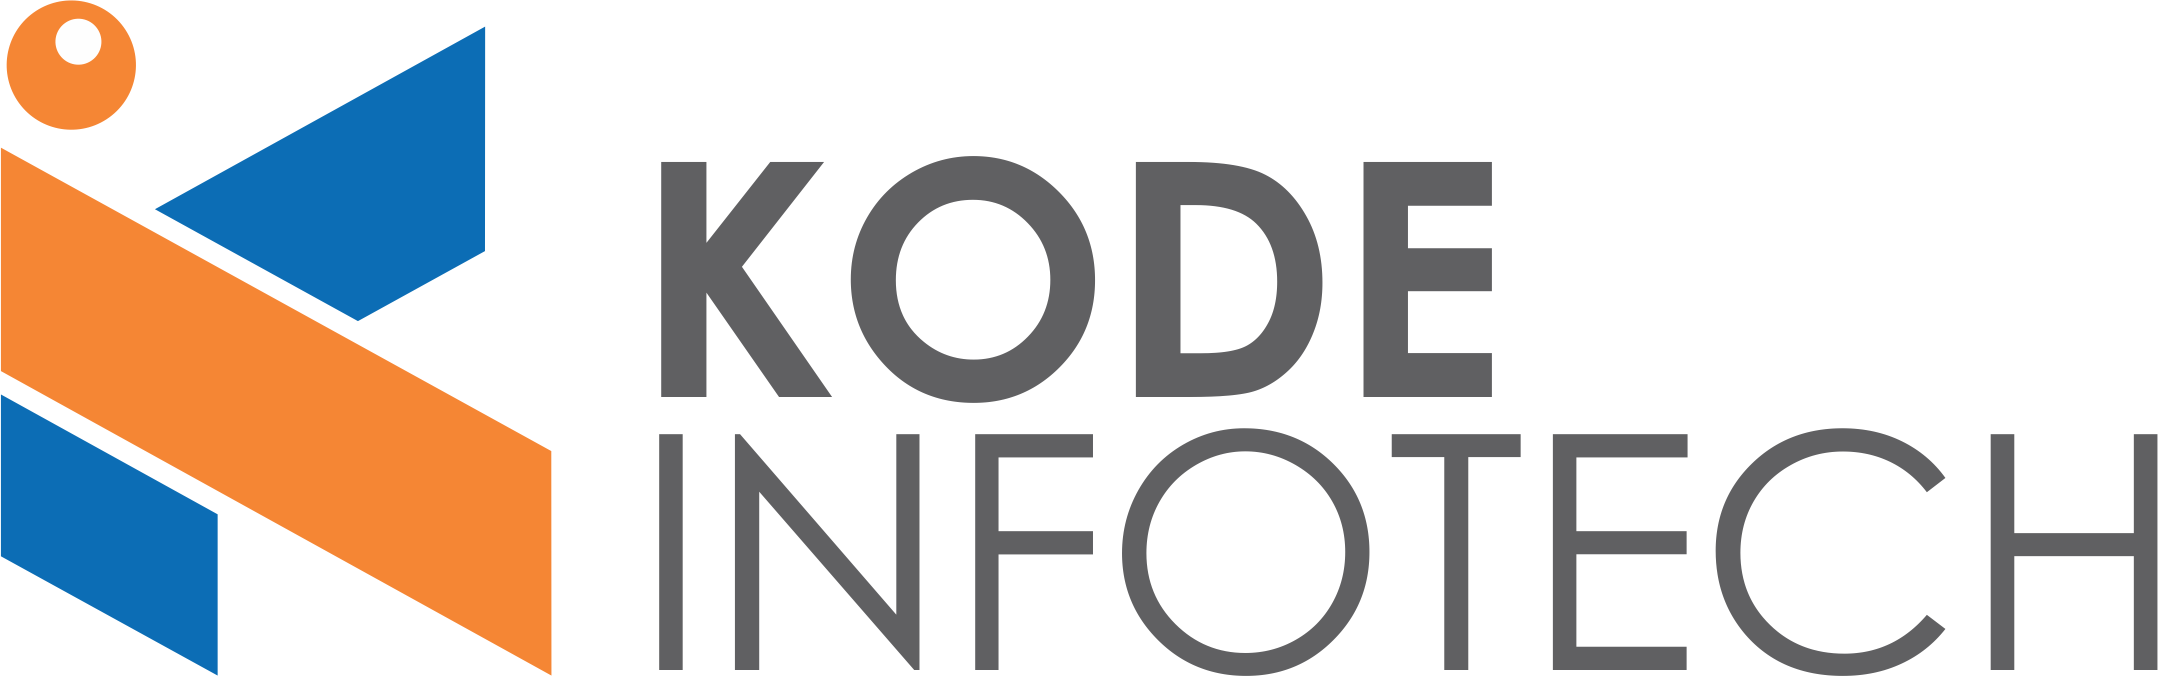 Kode Infotech Perfil de la compañía